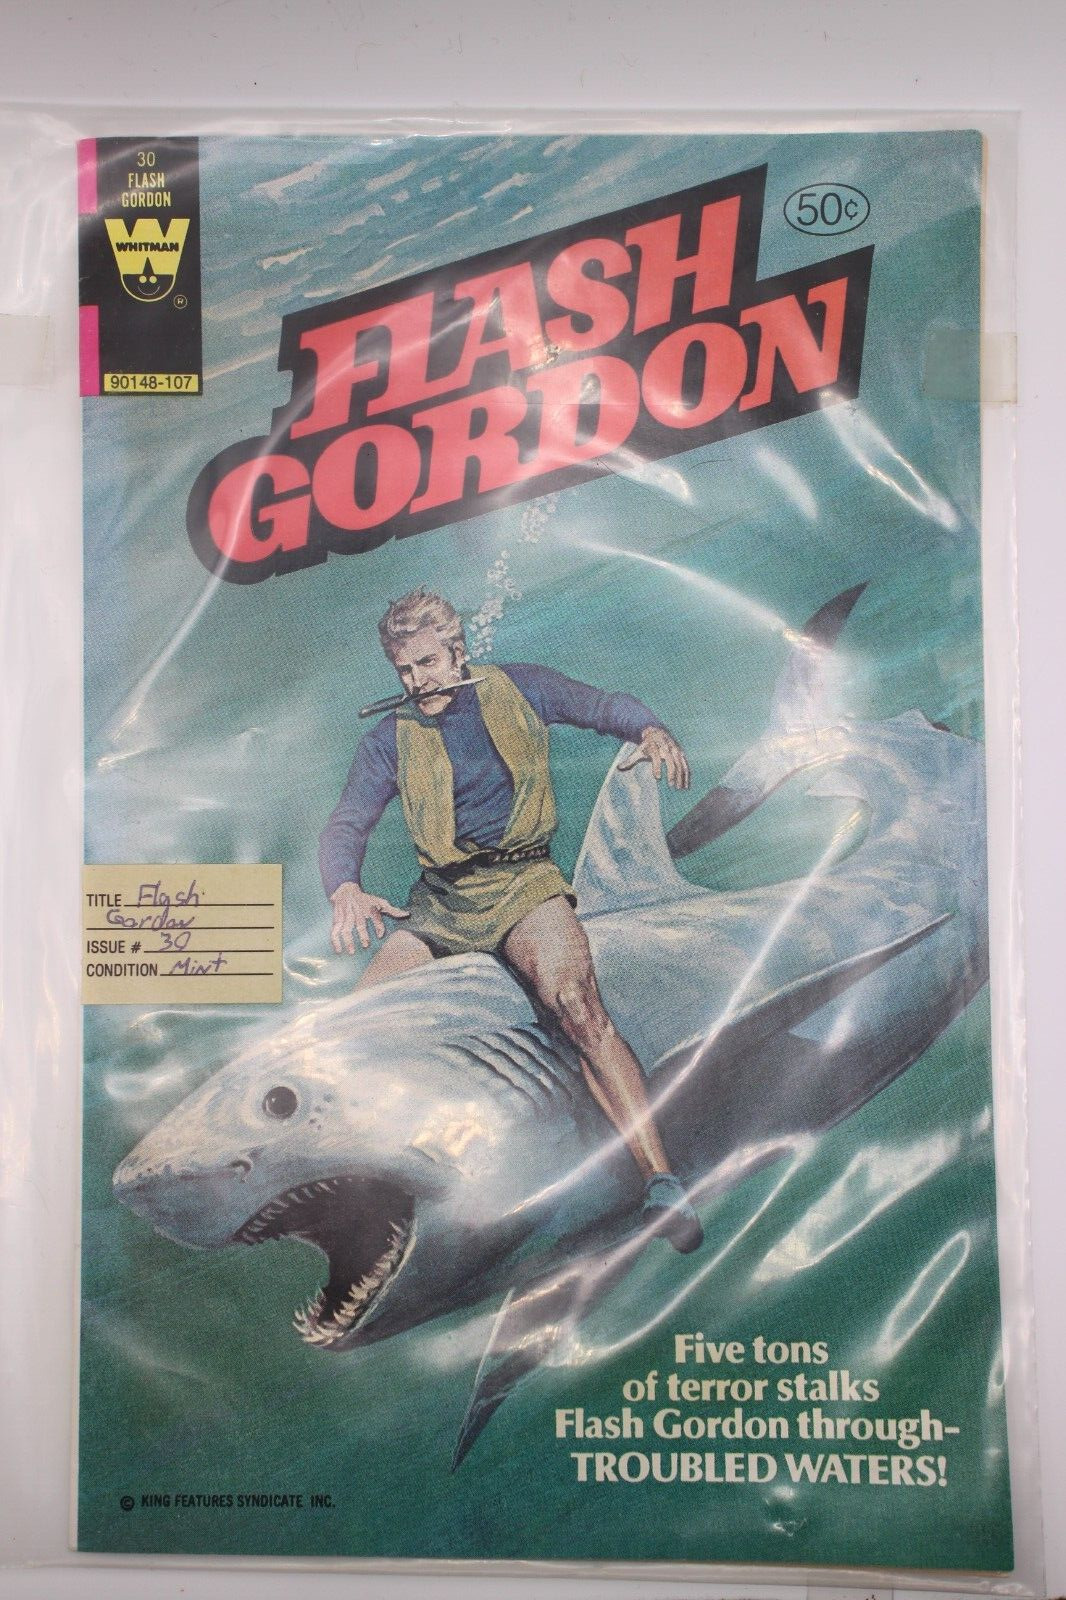 FLASH GORDON #30 SCARCE 40¢ COVER VARIANT *MINT* (1980 Whitman) - SHIP TODAY